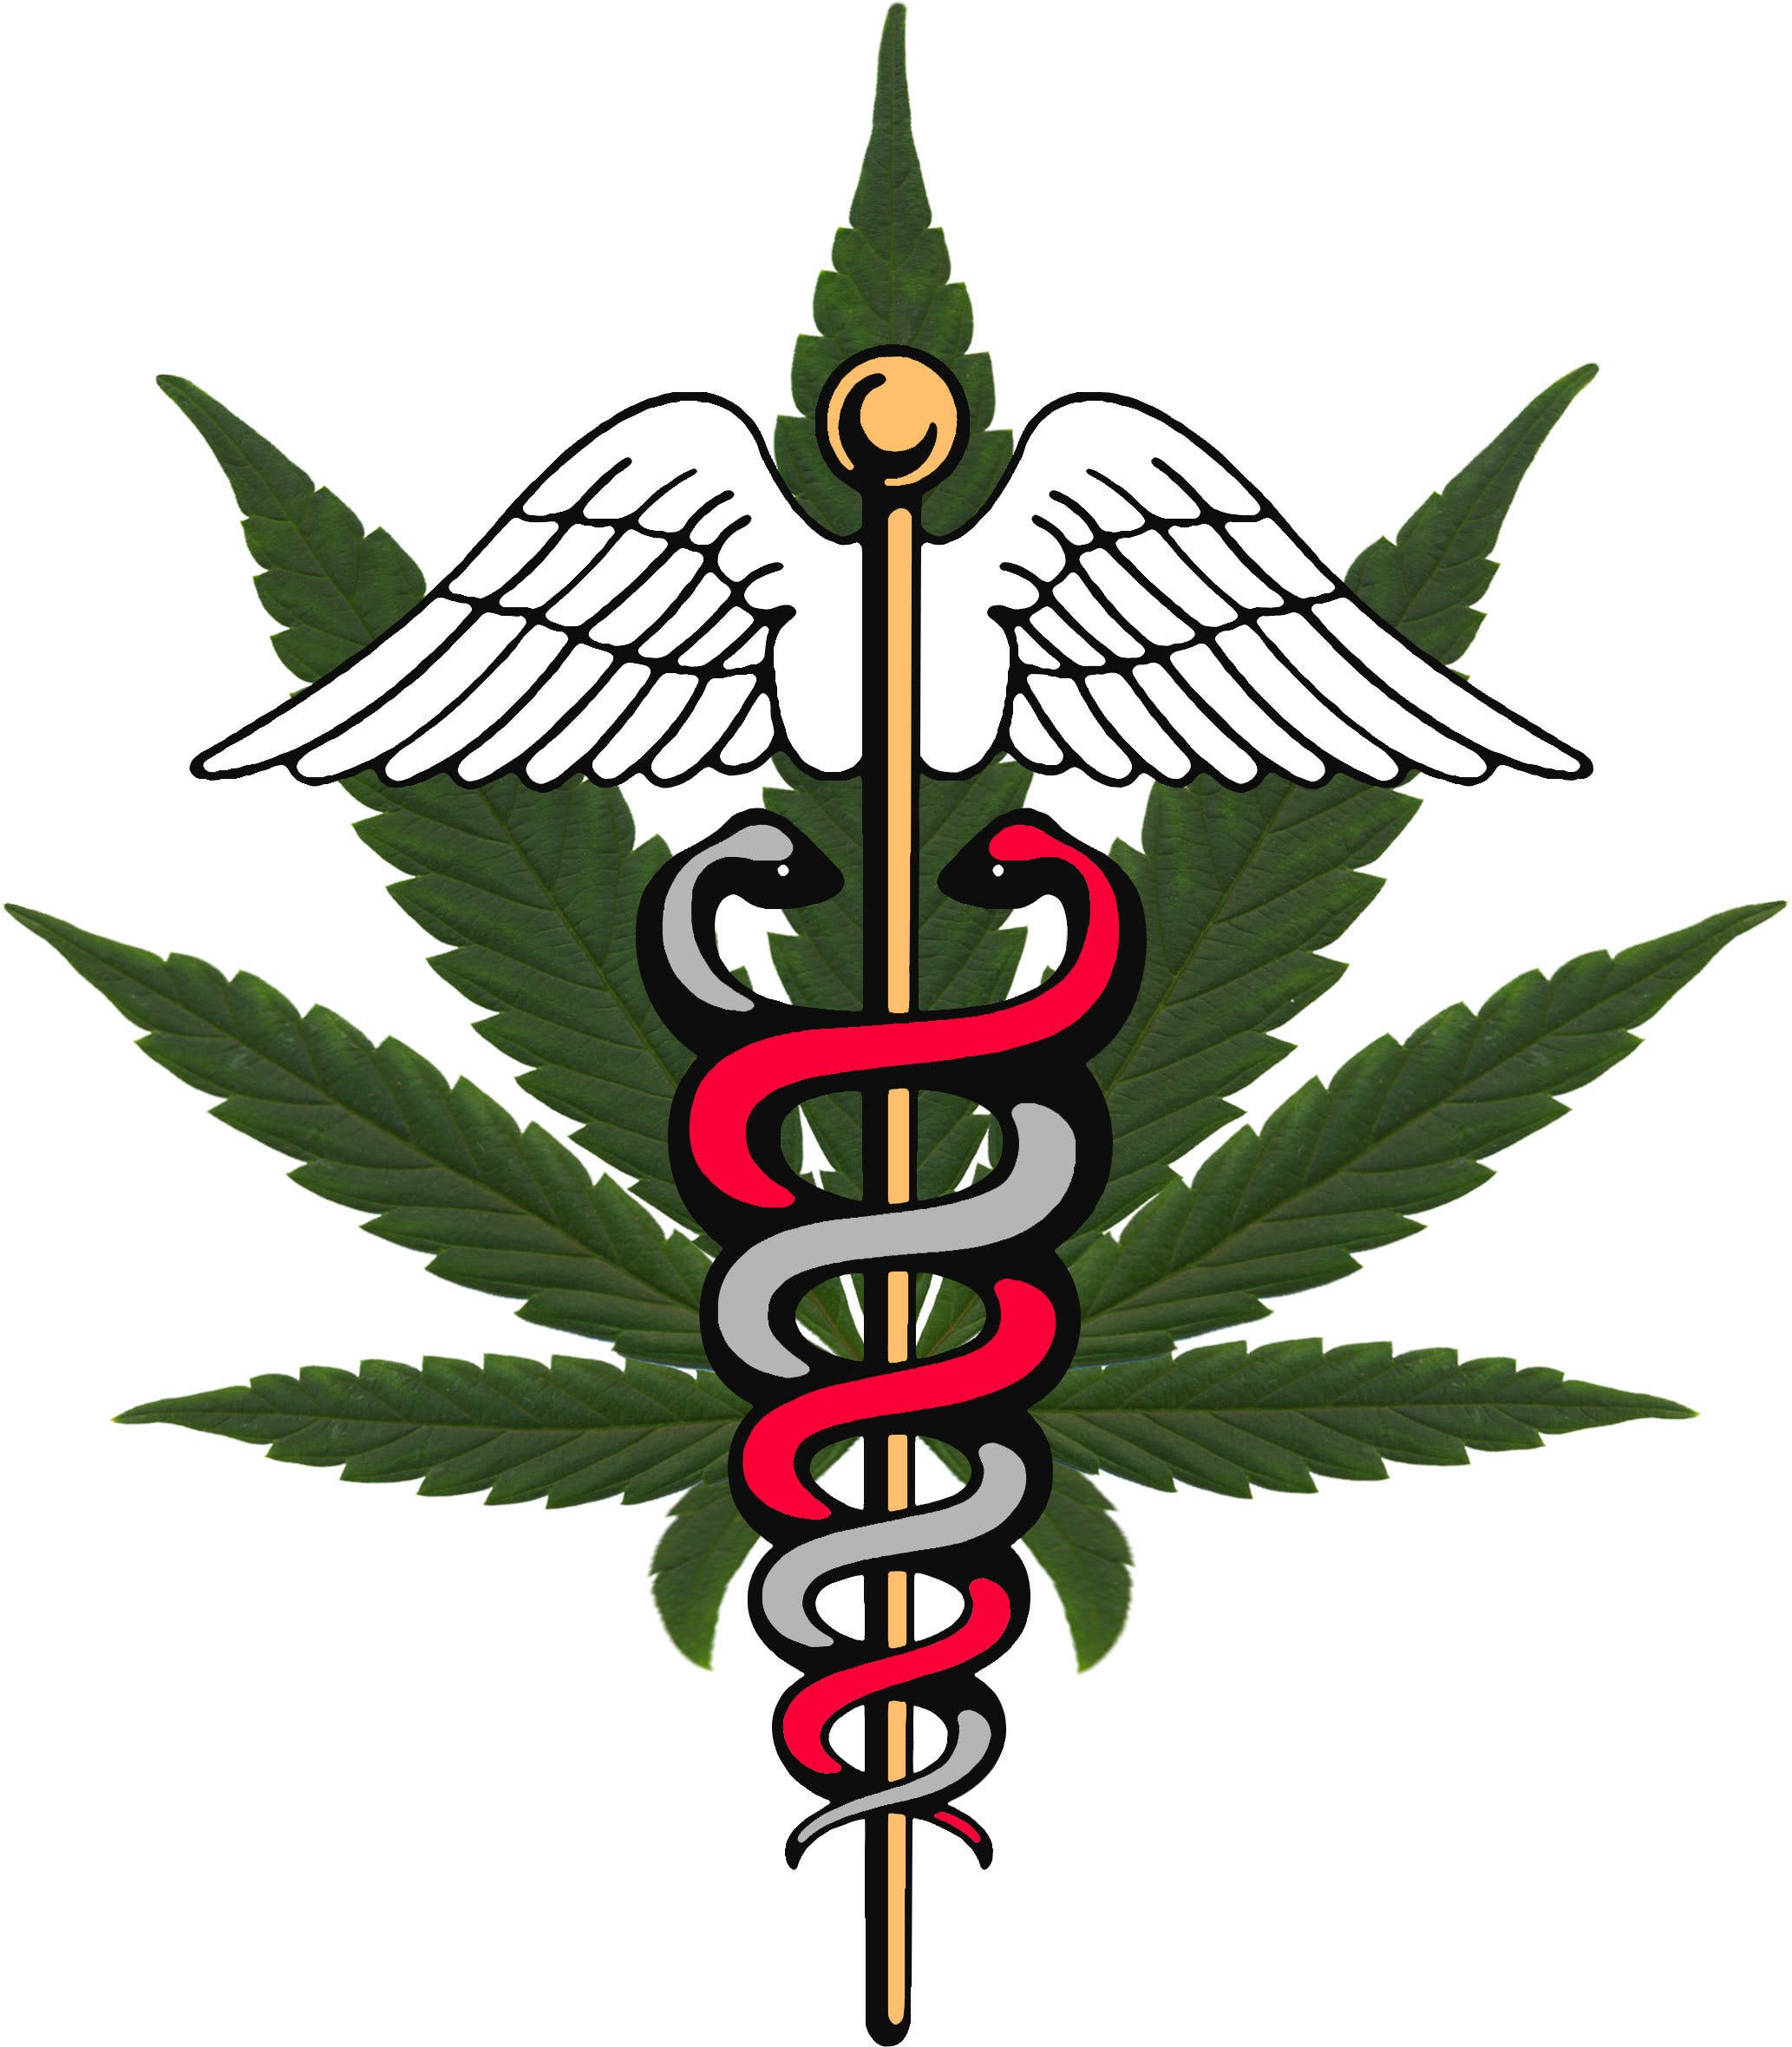 OC Comprehensive Care - Medical Marijuana Doctors - Cannabizme.com